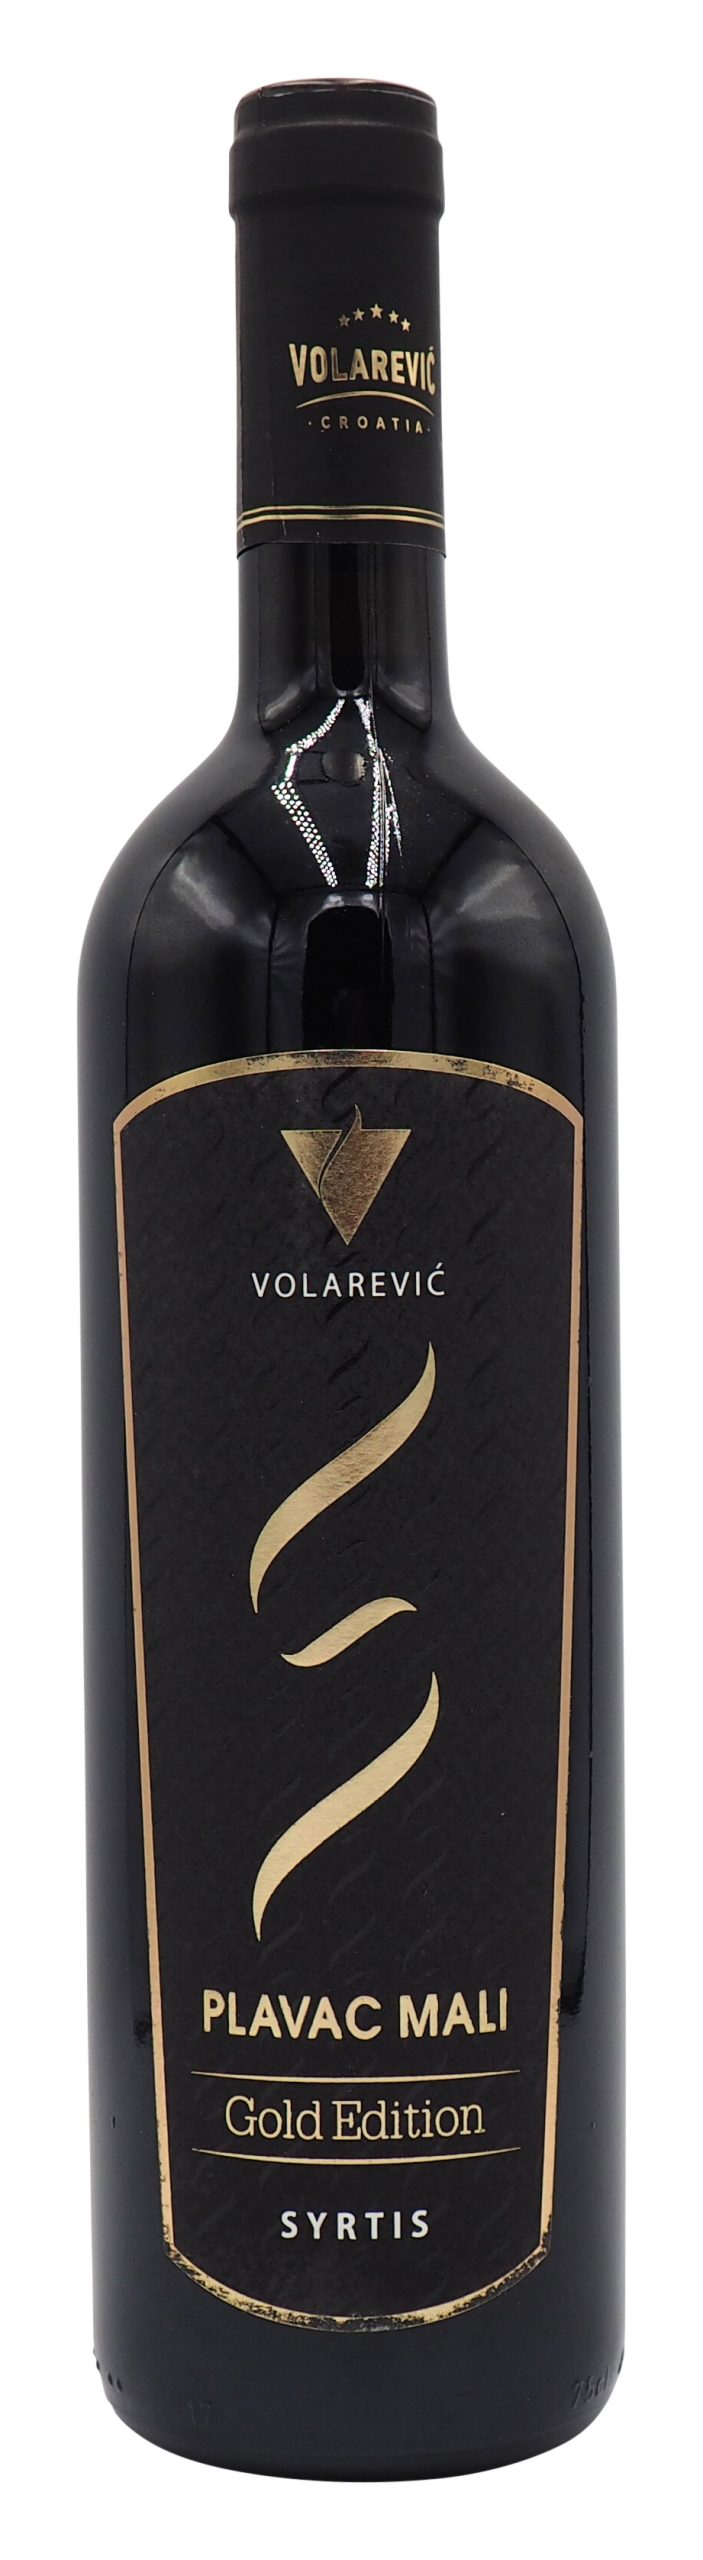 Volarević Plavac Mali “Gold Edition” 2016, Dalmatia, Croatia